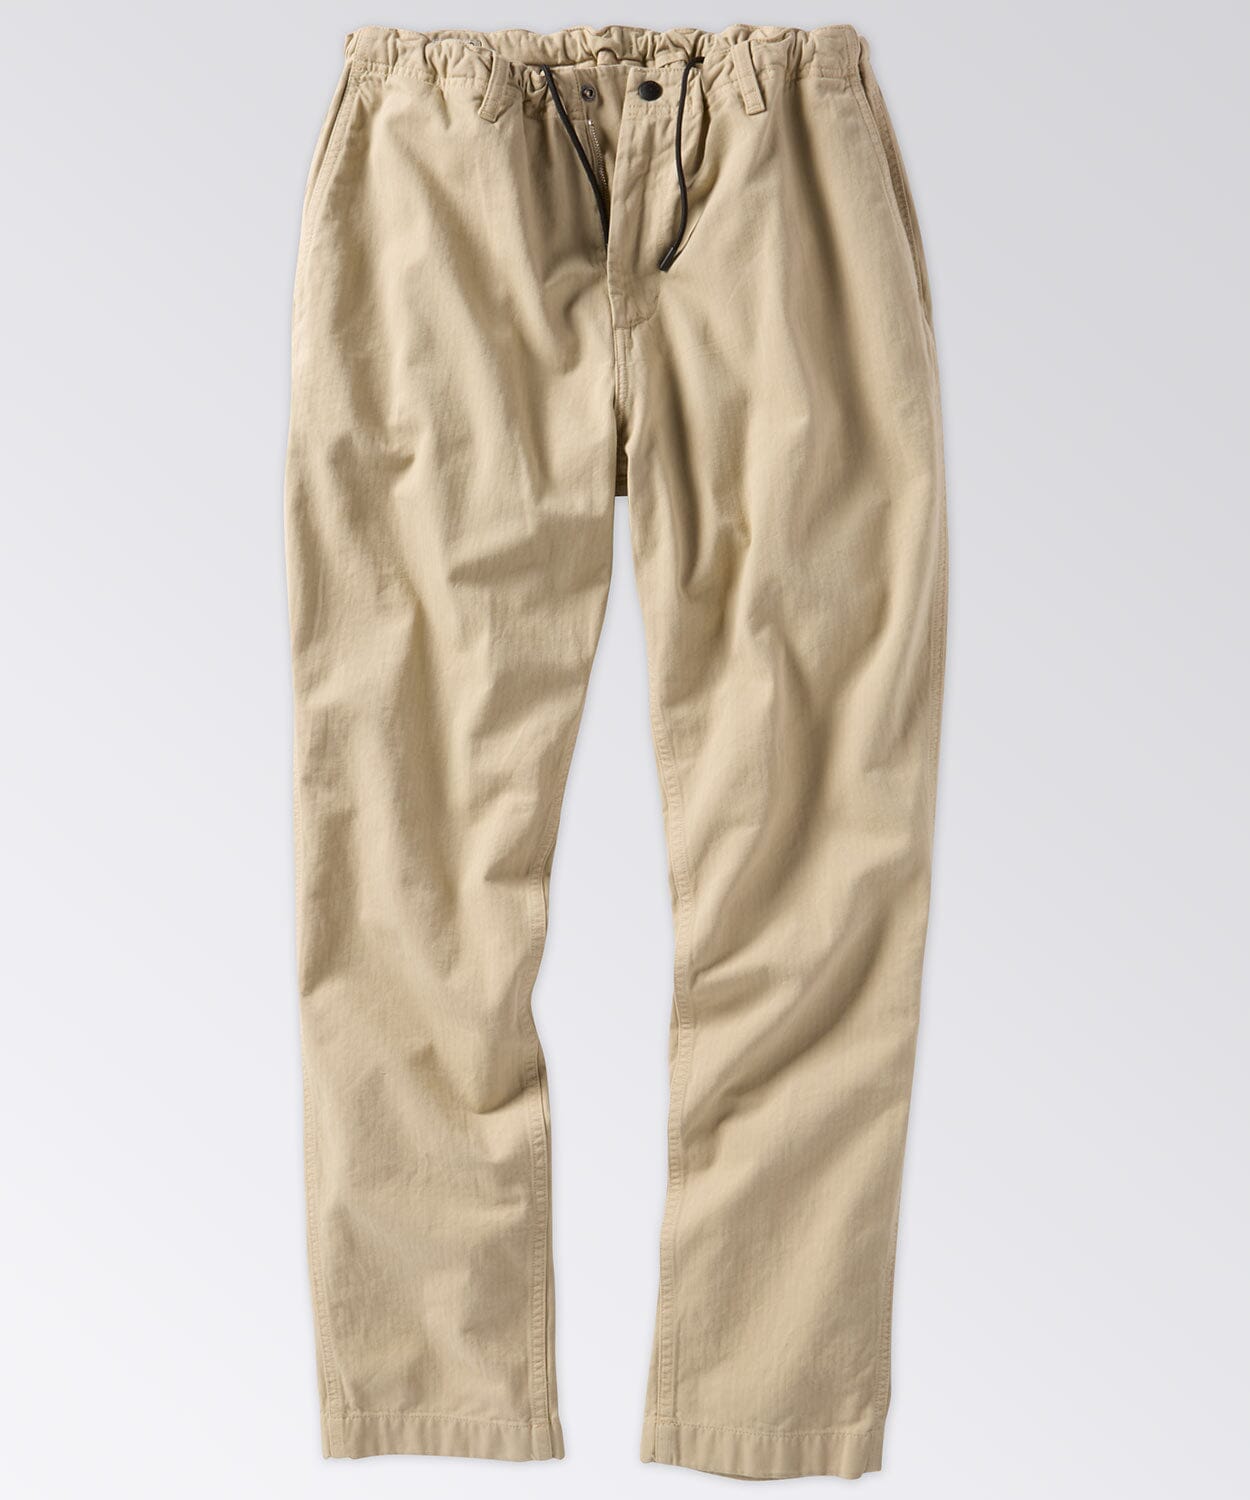 Banner Pant Pants OOBE BRAND Vintage Khaki 32" 30"